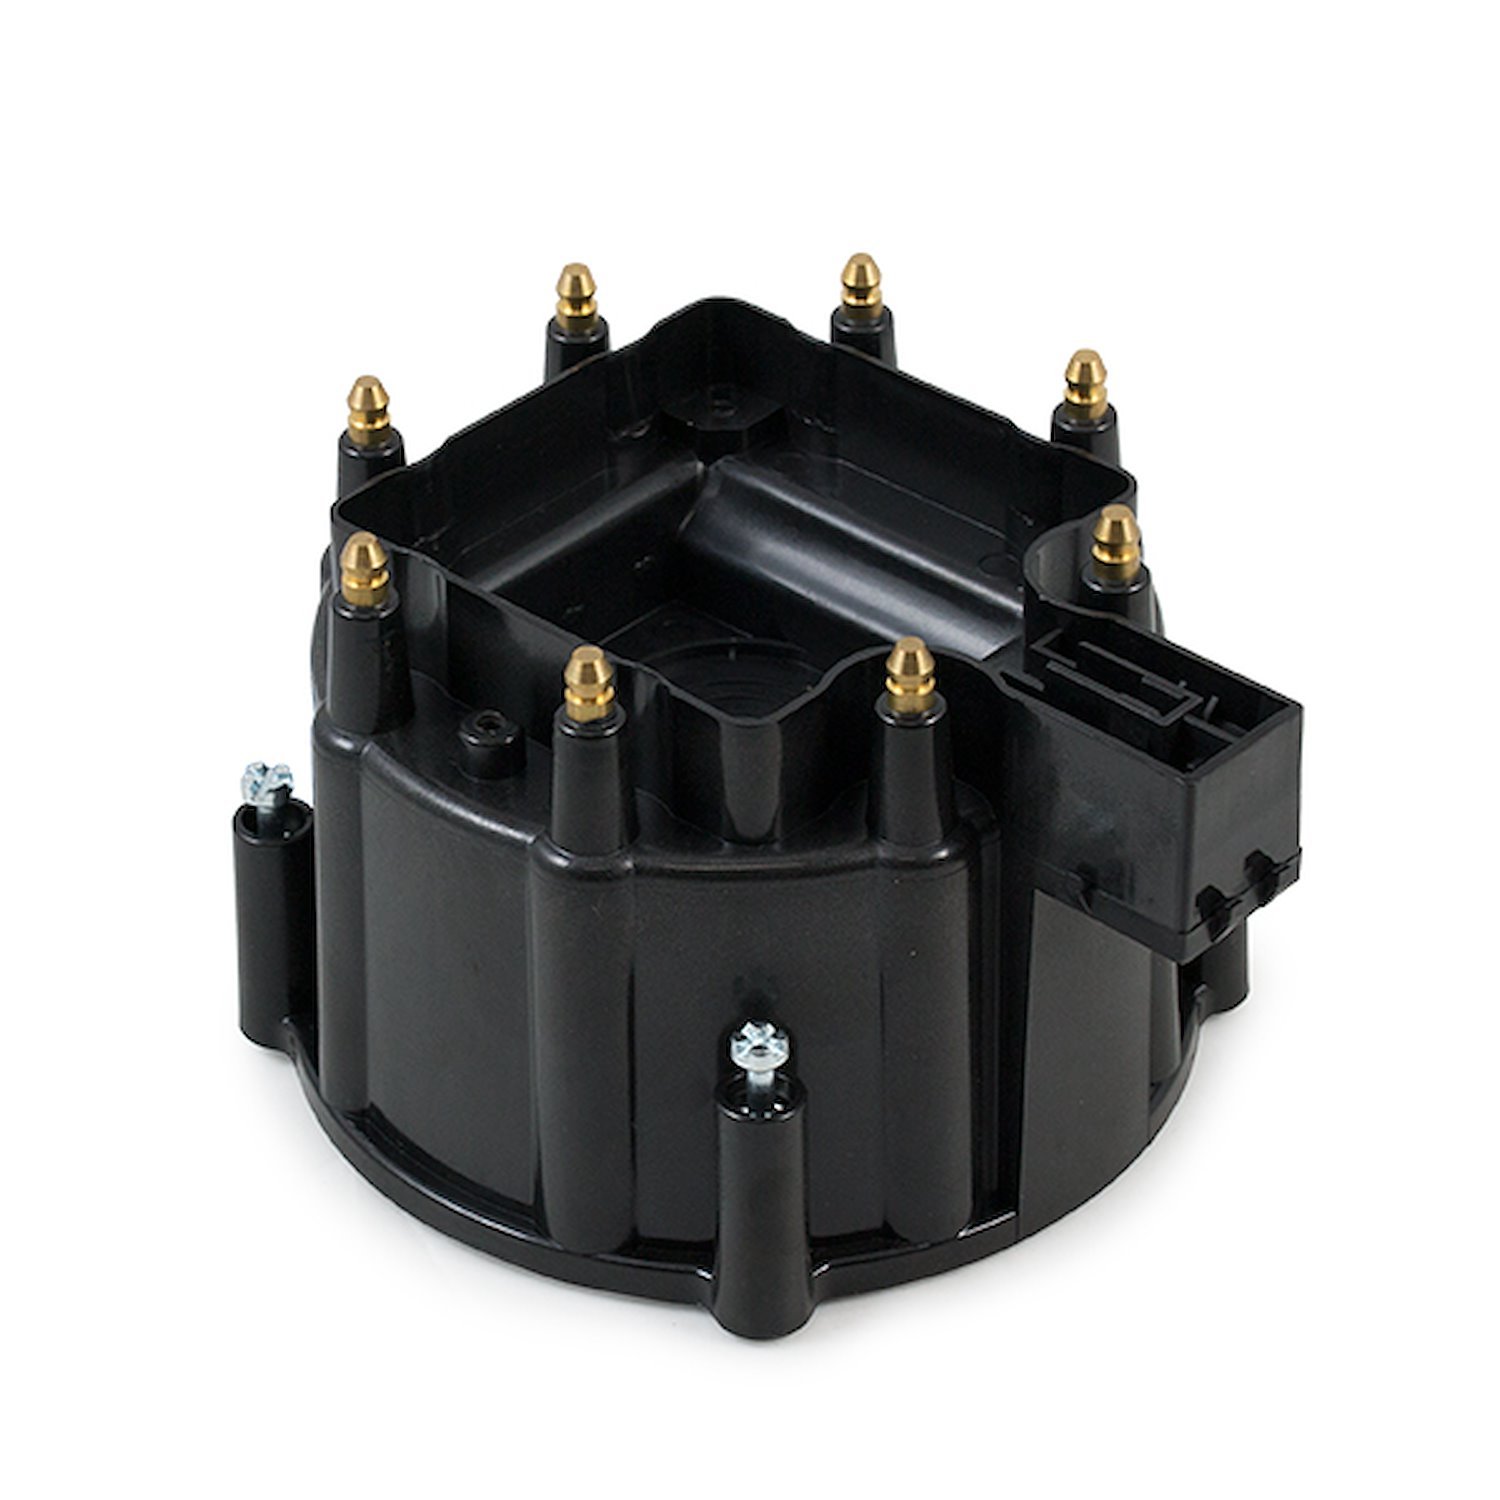 JM6904BK HEI Distributor Cap, 8 Cylinder Male, Black